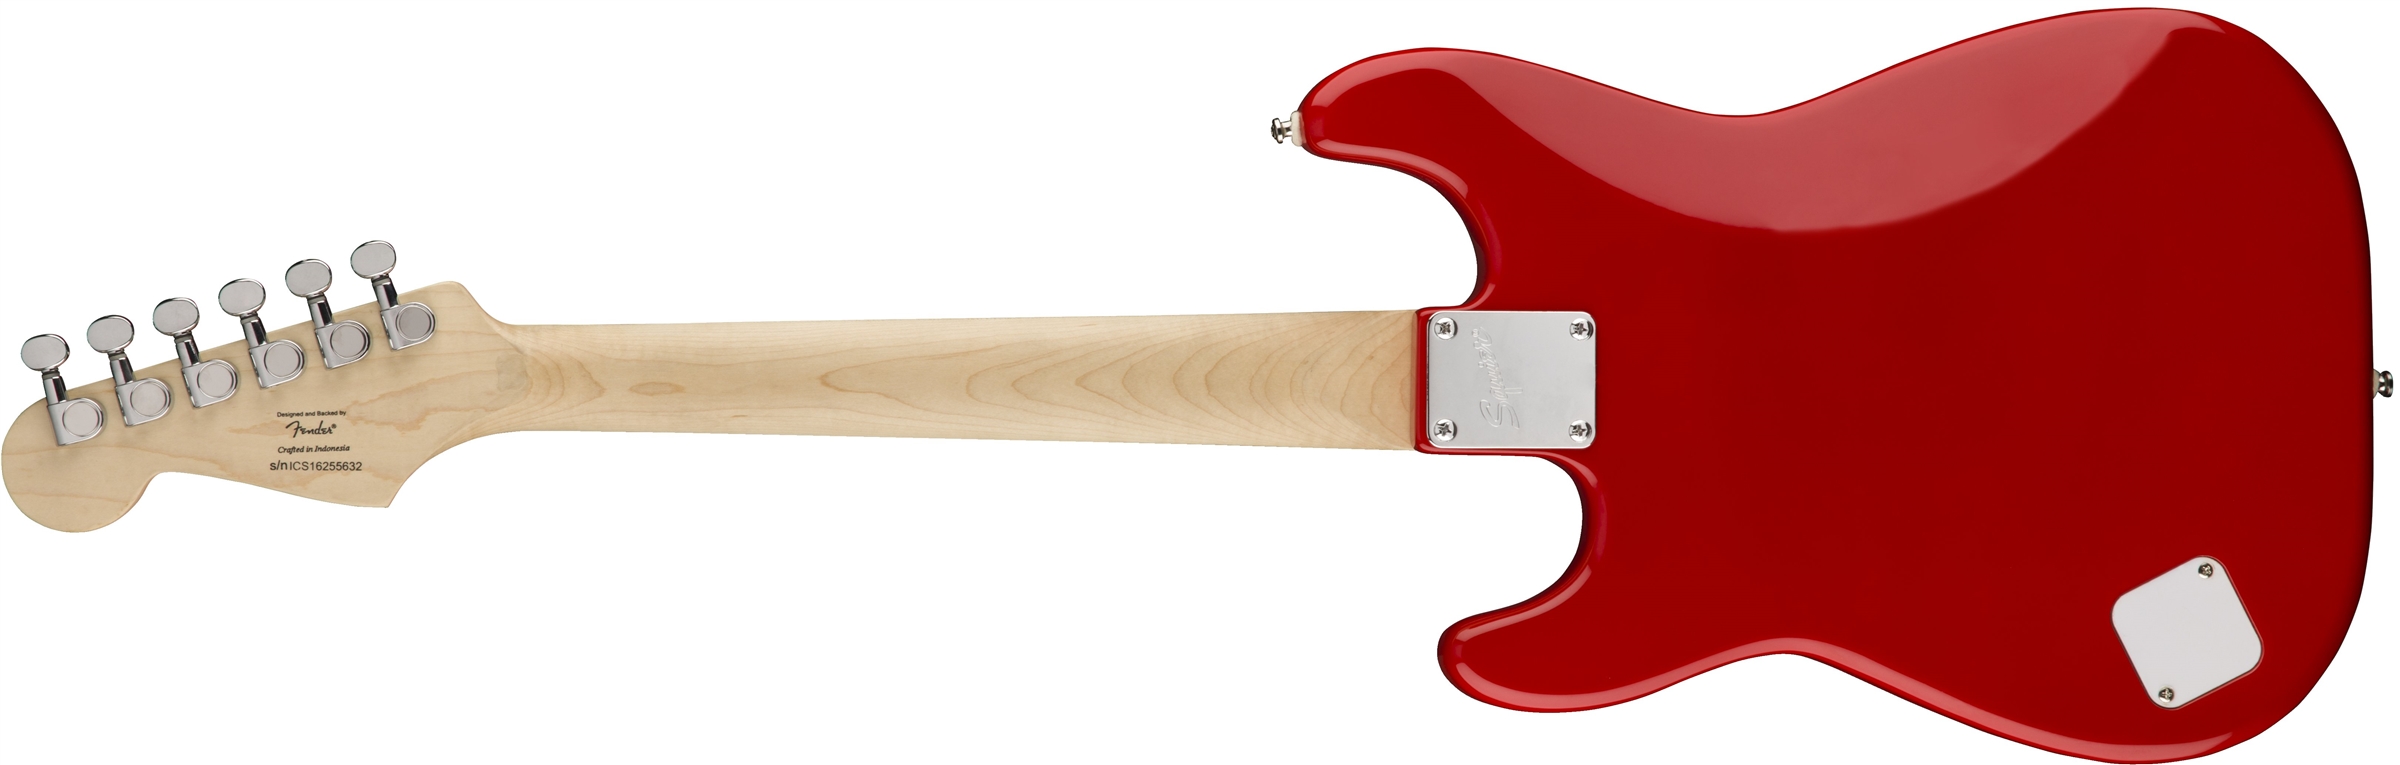 Squier Strat Mini V2 Sss Ht Rw - Torino Red - Guitare Électrique Enfant - Variation 1